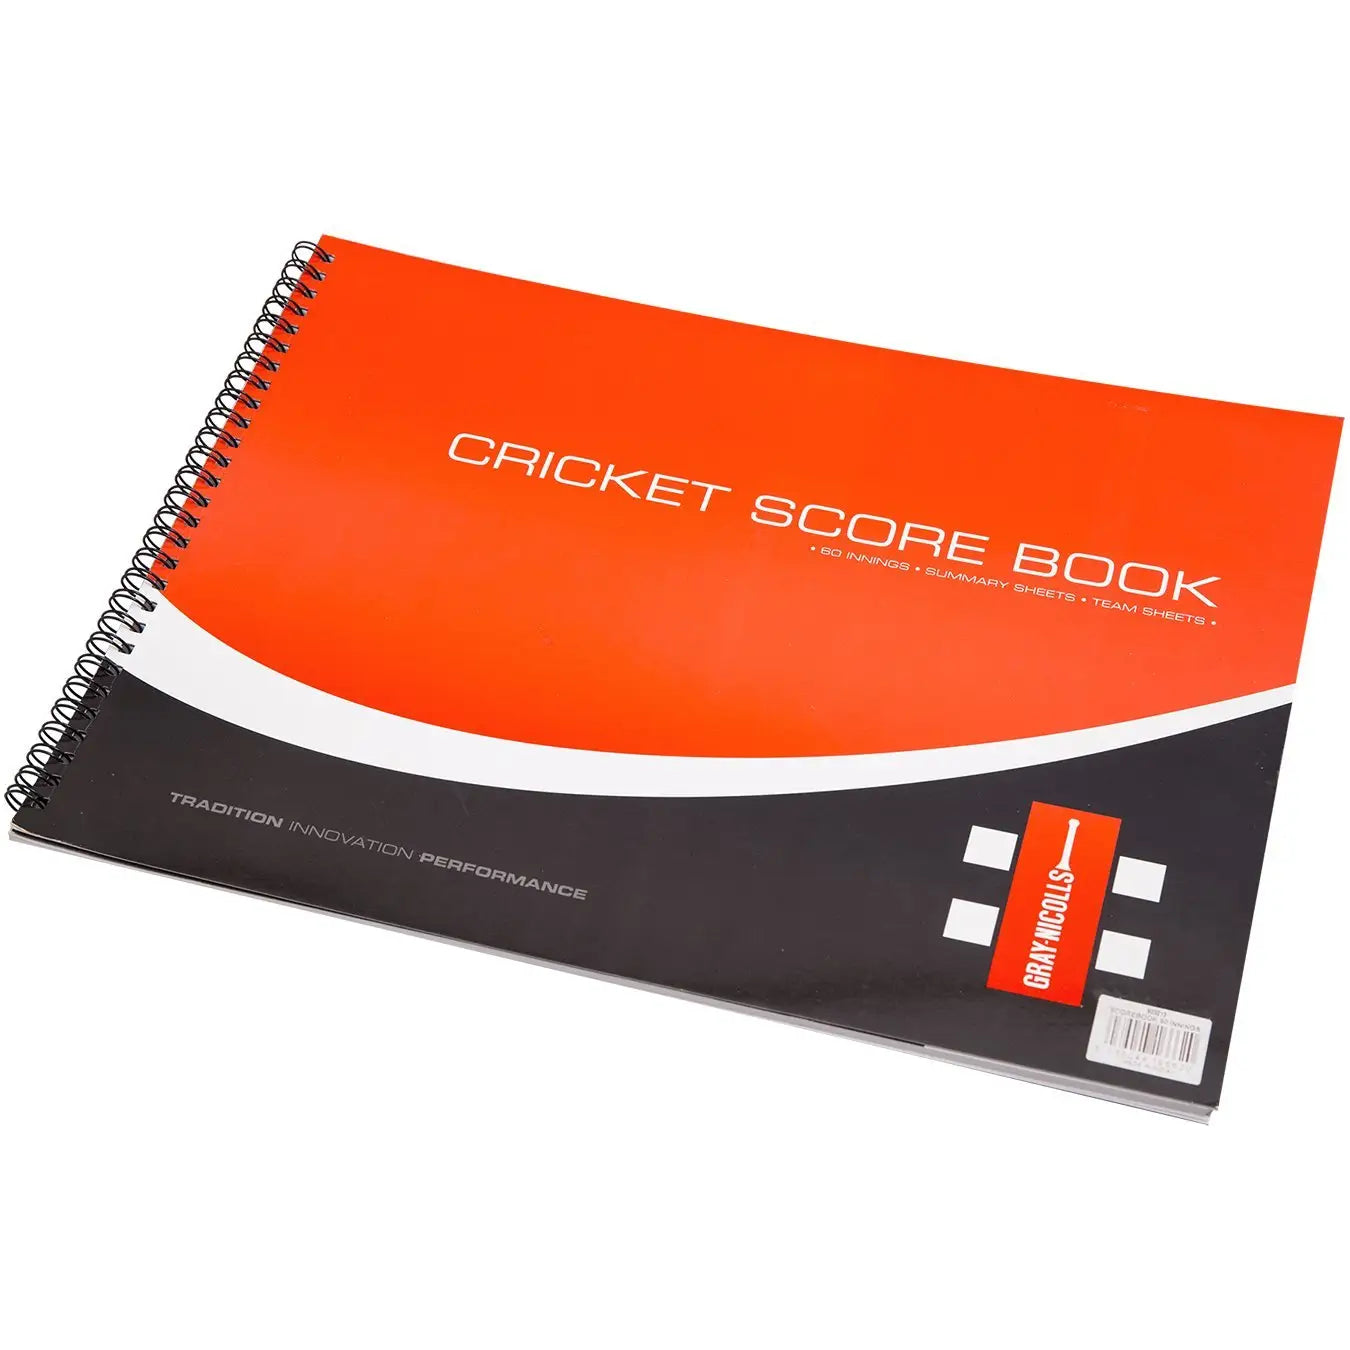 Cricket Score Book 60 Innings Landscape Score Book Spiral Softcover Gray Nicolls - SCORE BOOKS